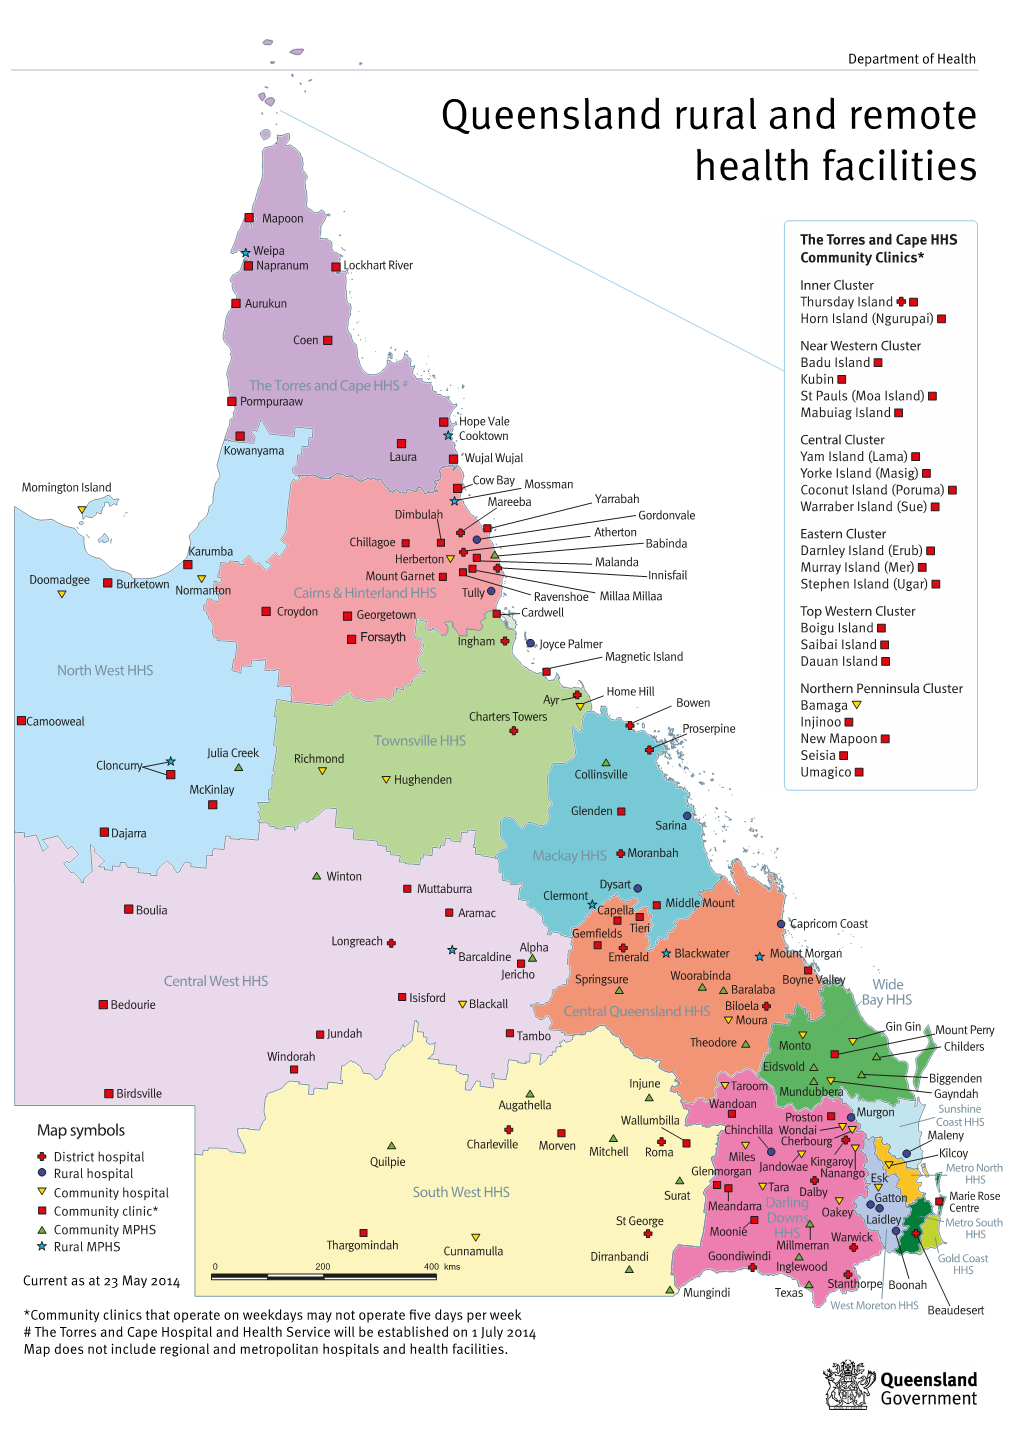 Queensland Rural and Remote Health Facilities